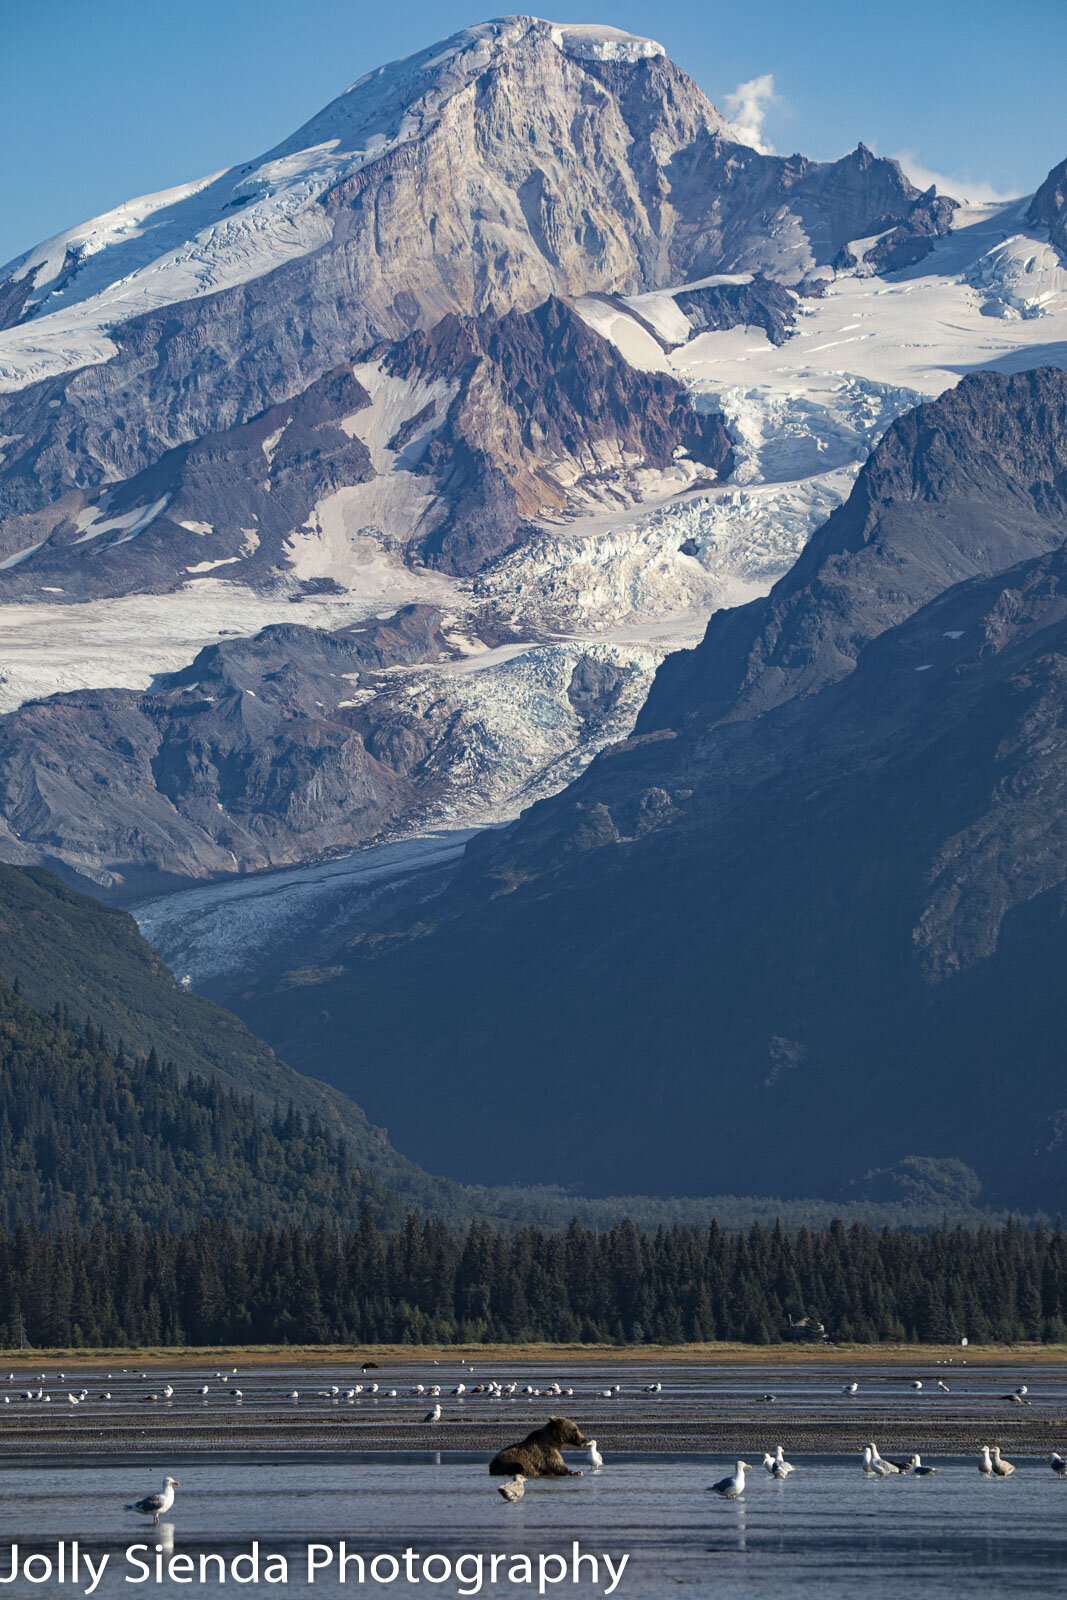 Mount Iliamna glacier looks down on a bear and seagulls